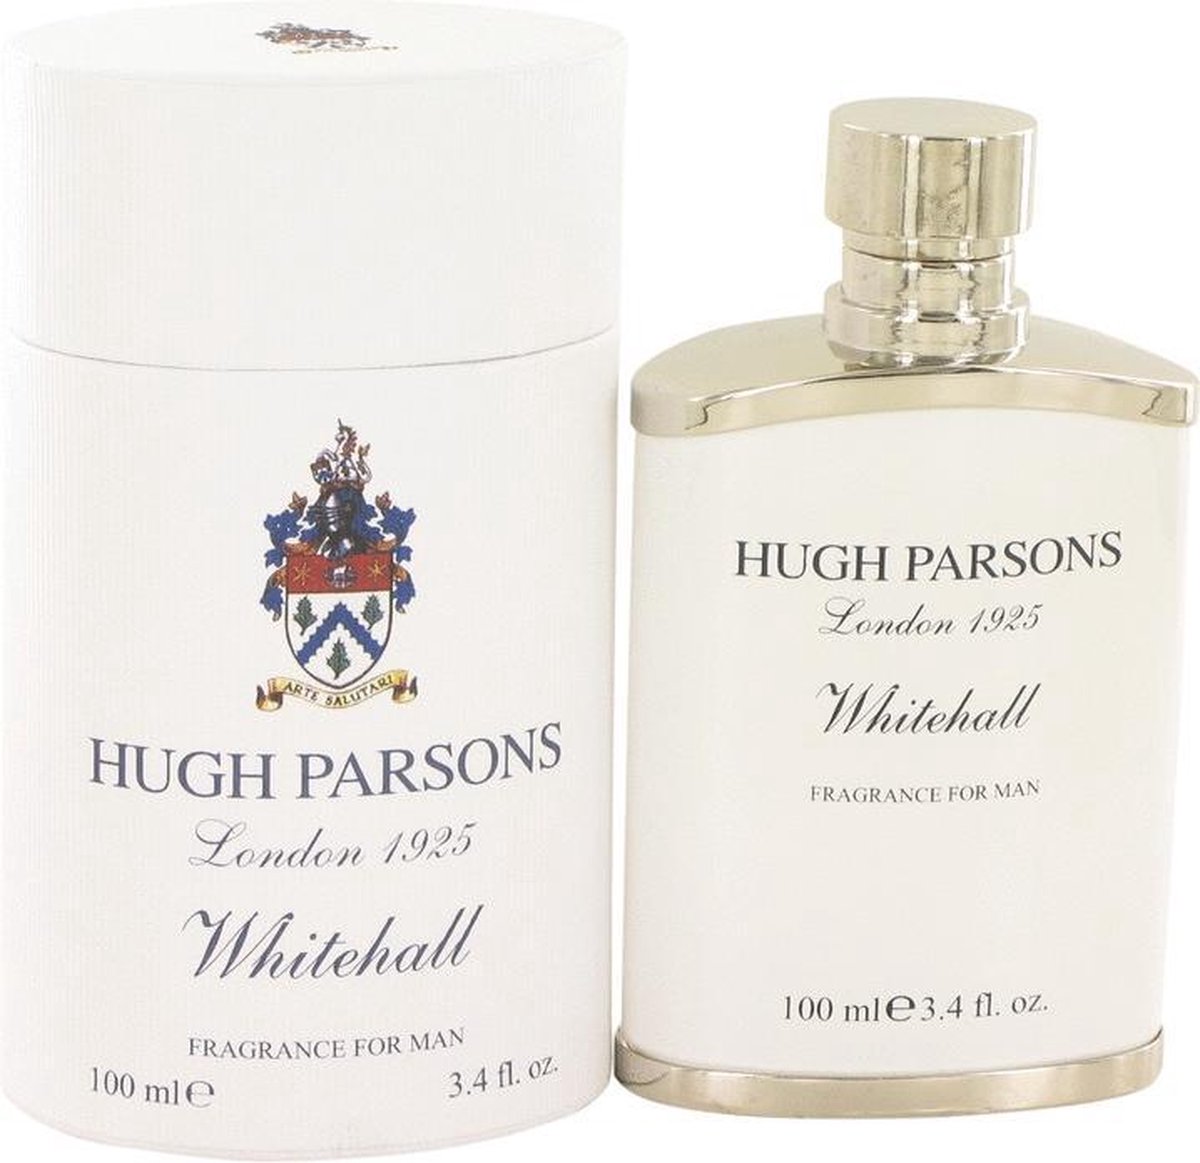 Hugh Parsons Whitehall by Hugh Parsons 100 ml - Eau De Parfum Spray